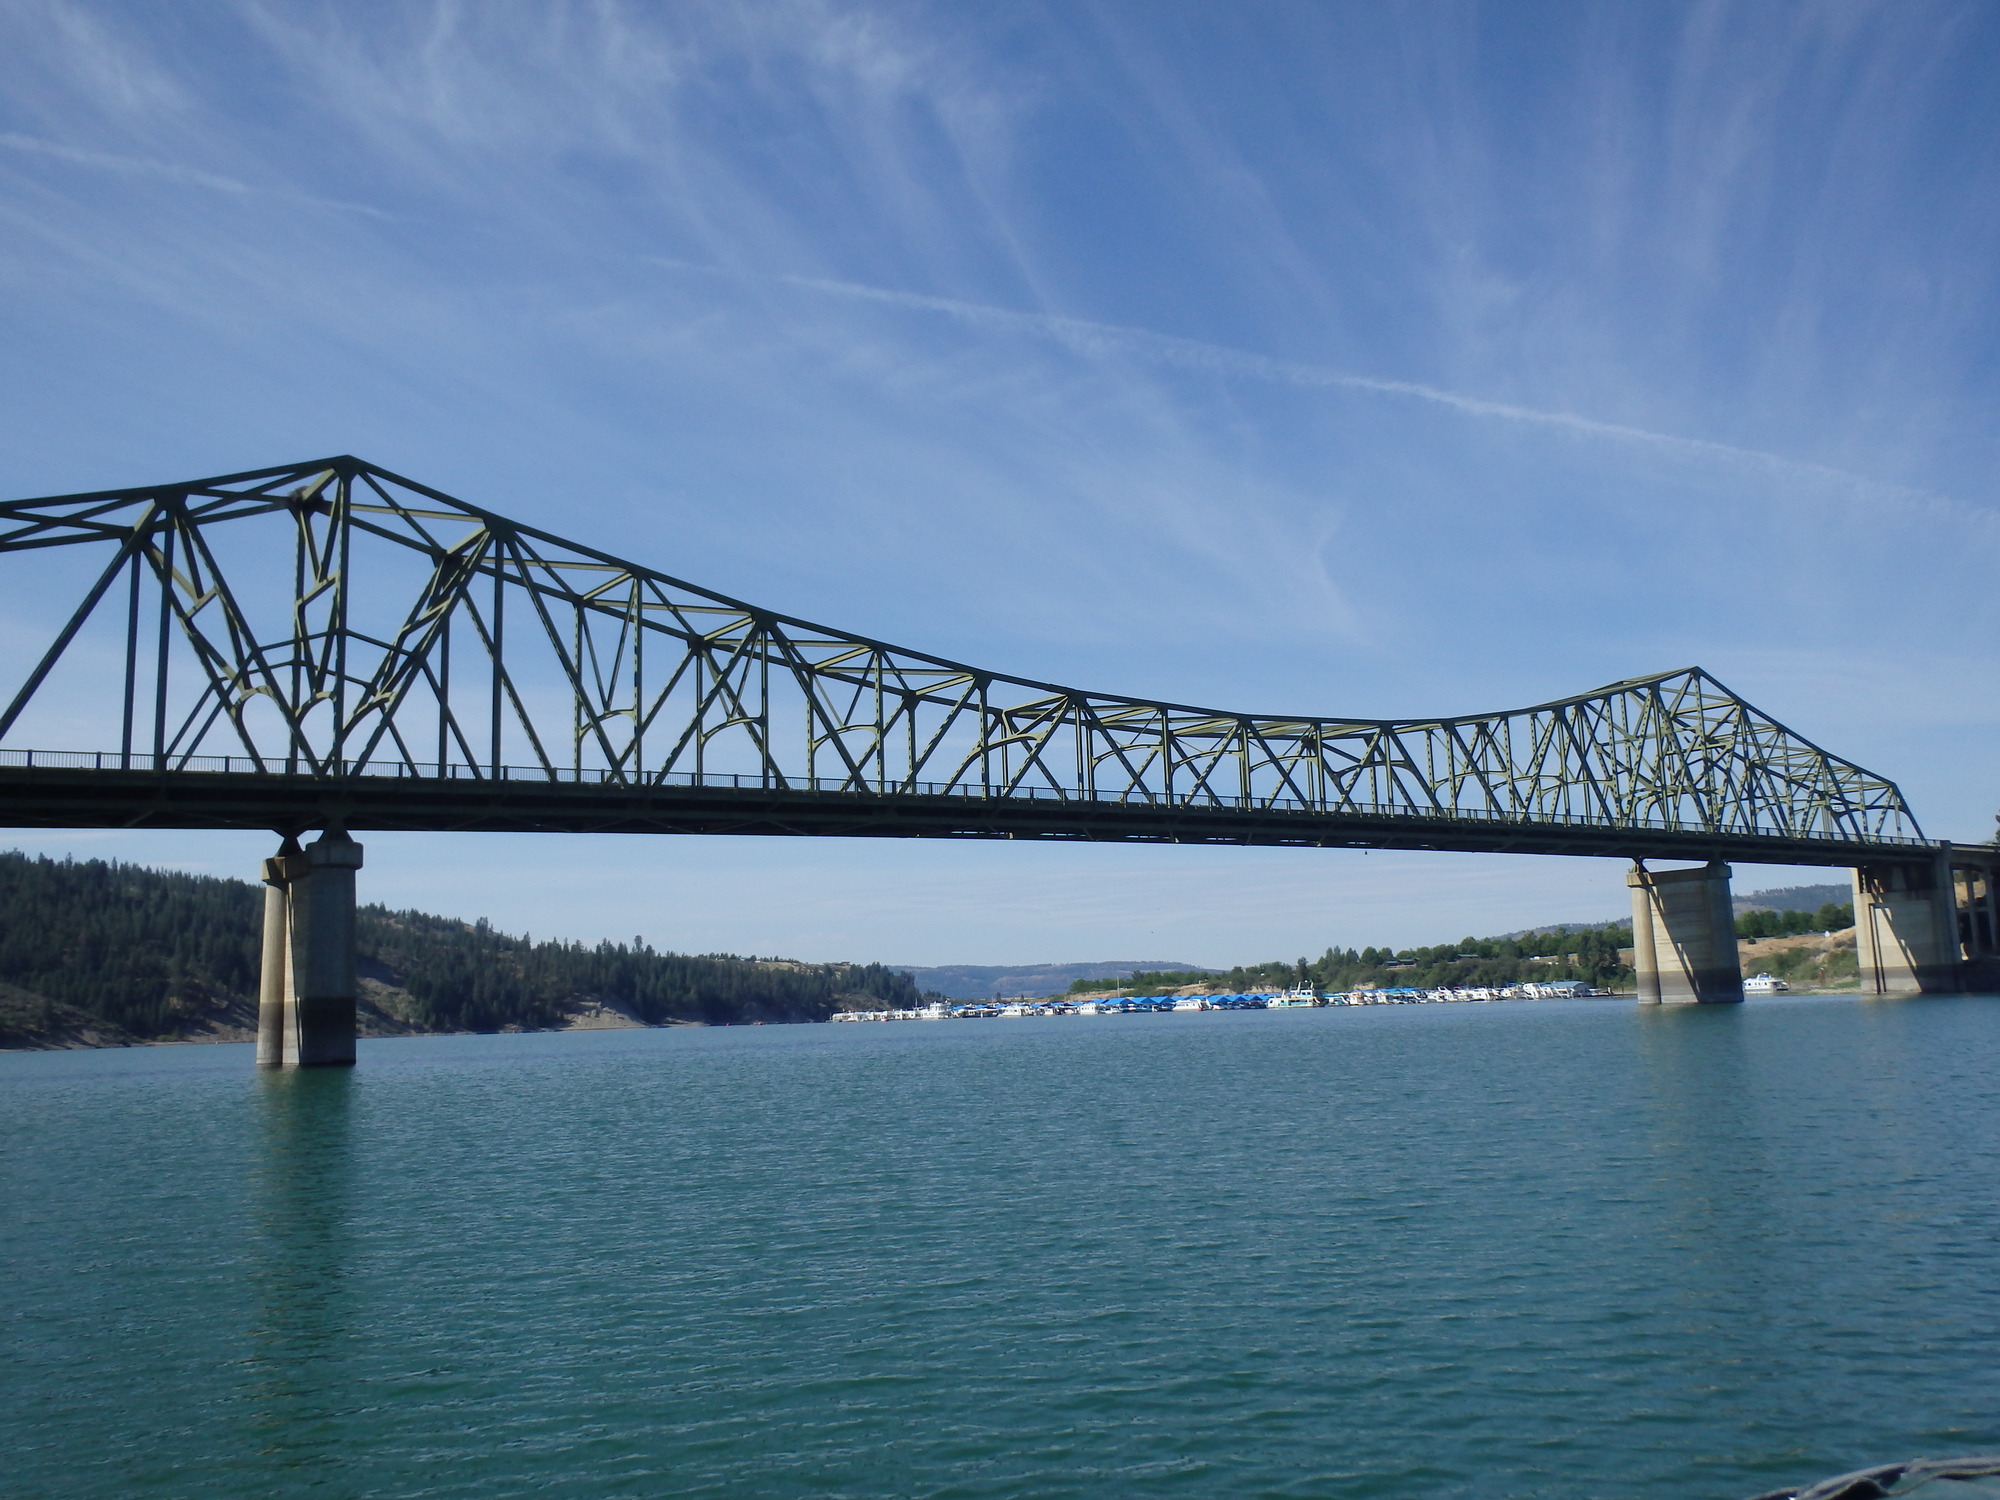 Color photograph of a metal bridge spanning a river